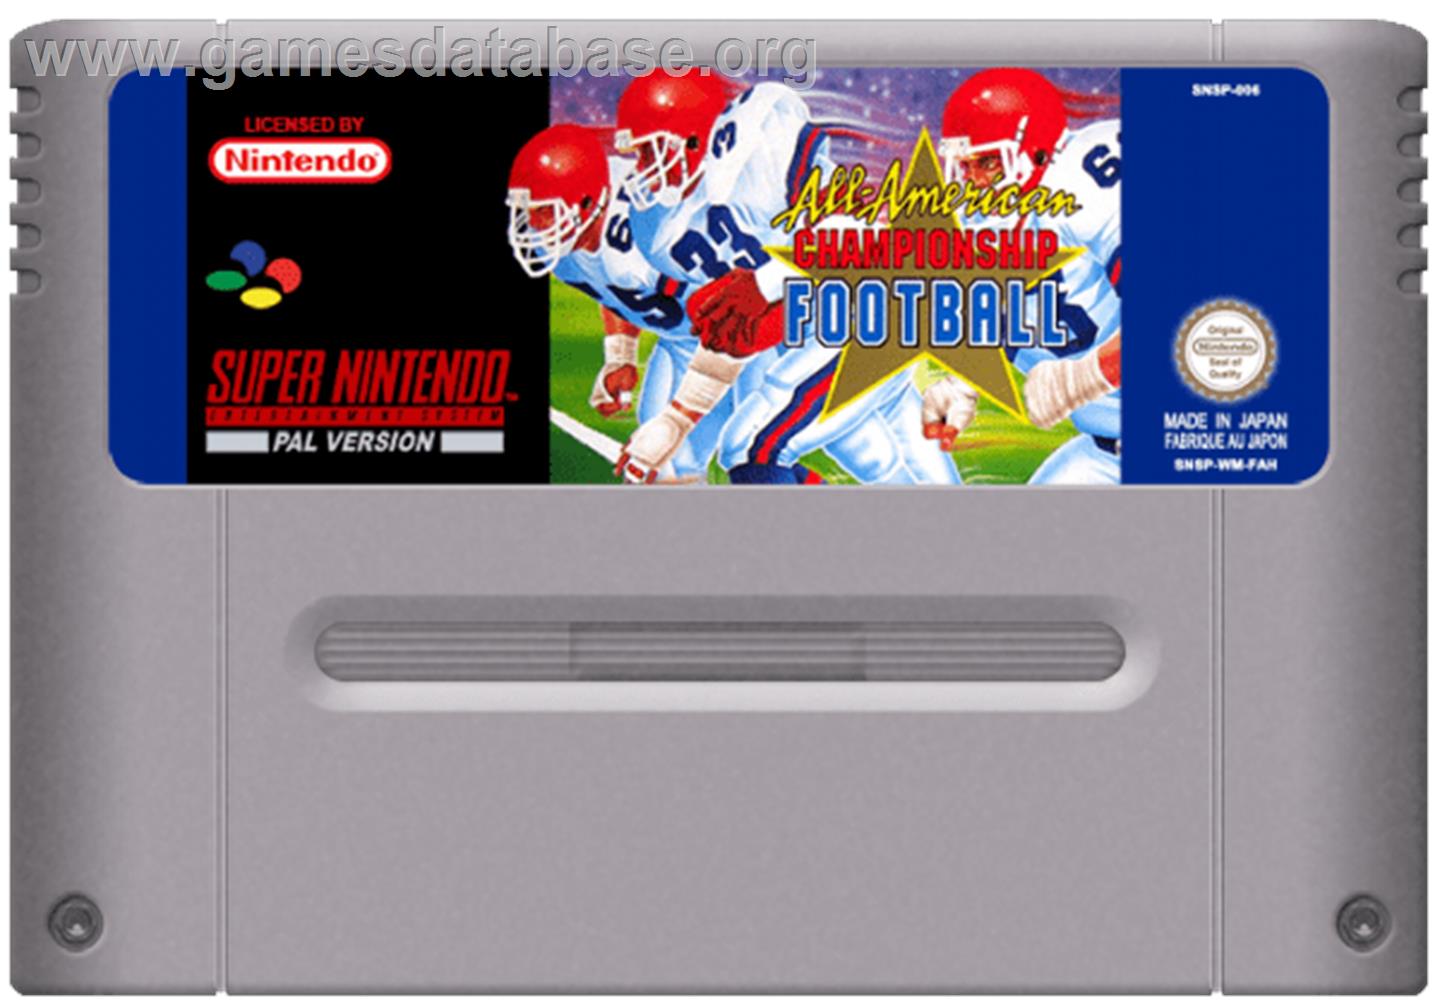 All-American Championship Football - Nintendo SNES - Artwork - Cartridge